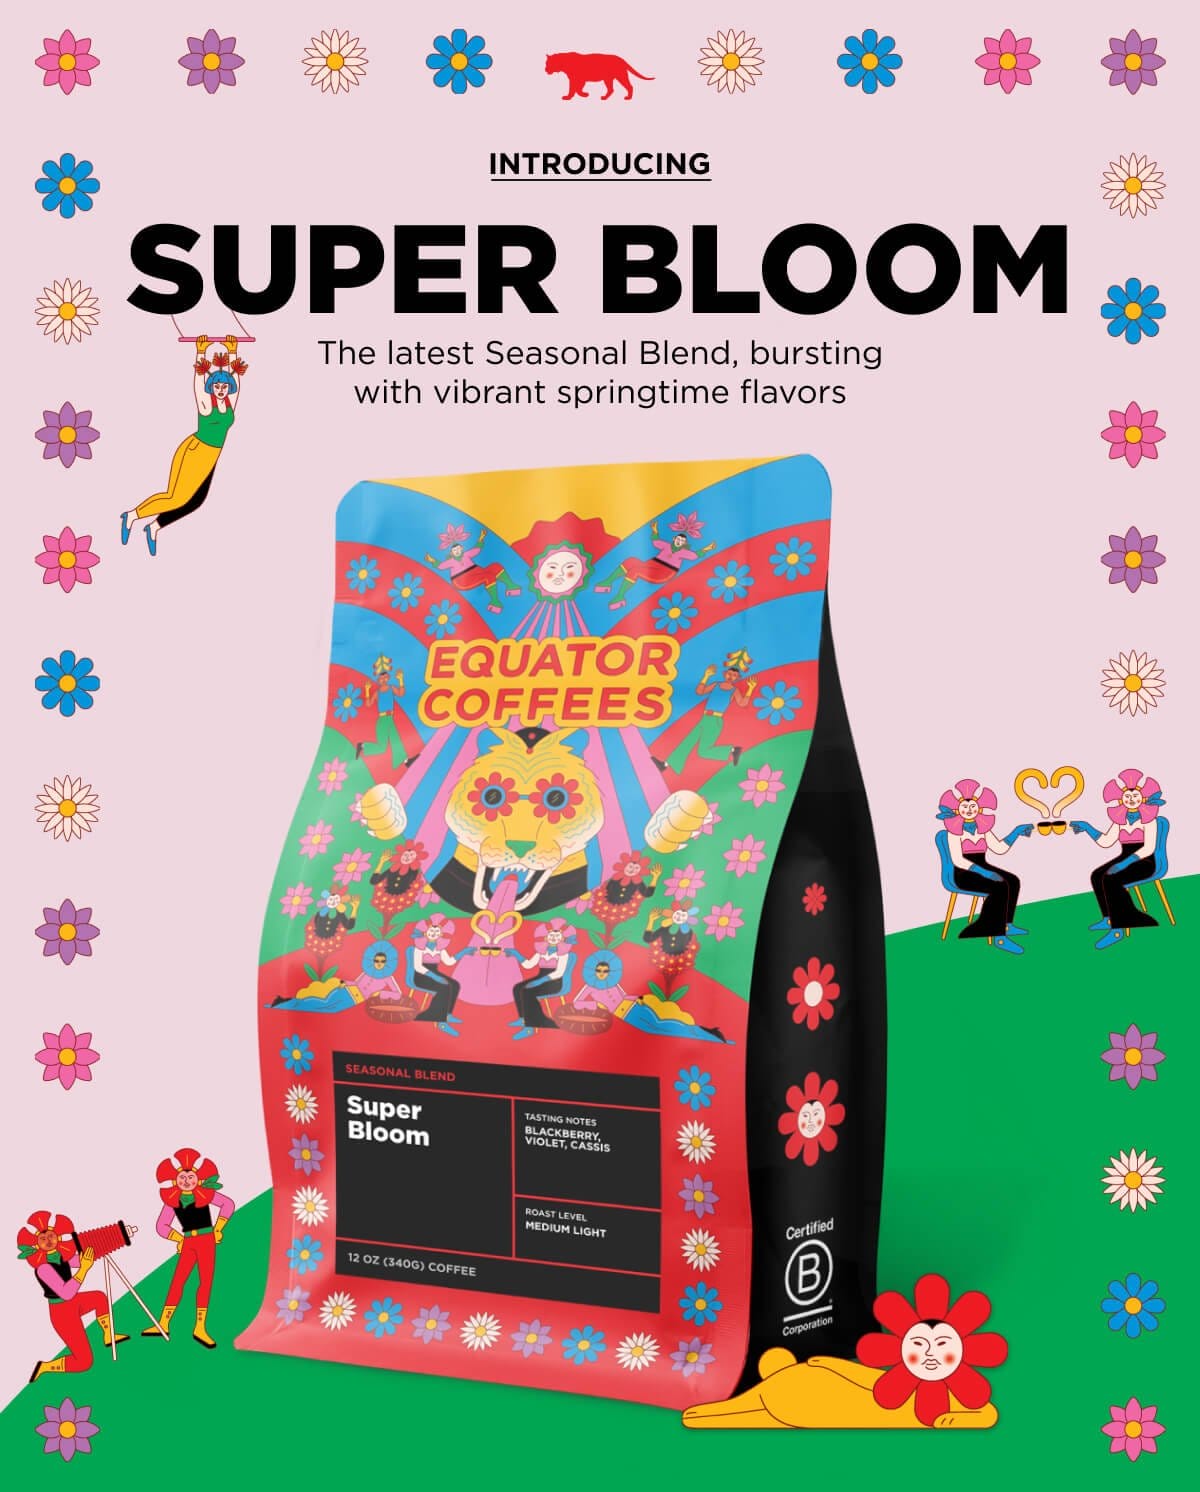 Introducing Super Bloom